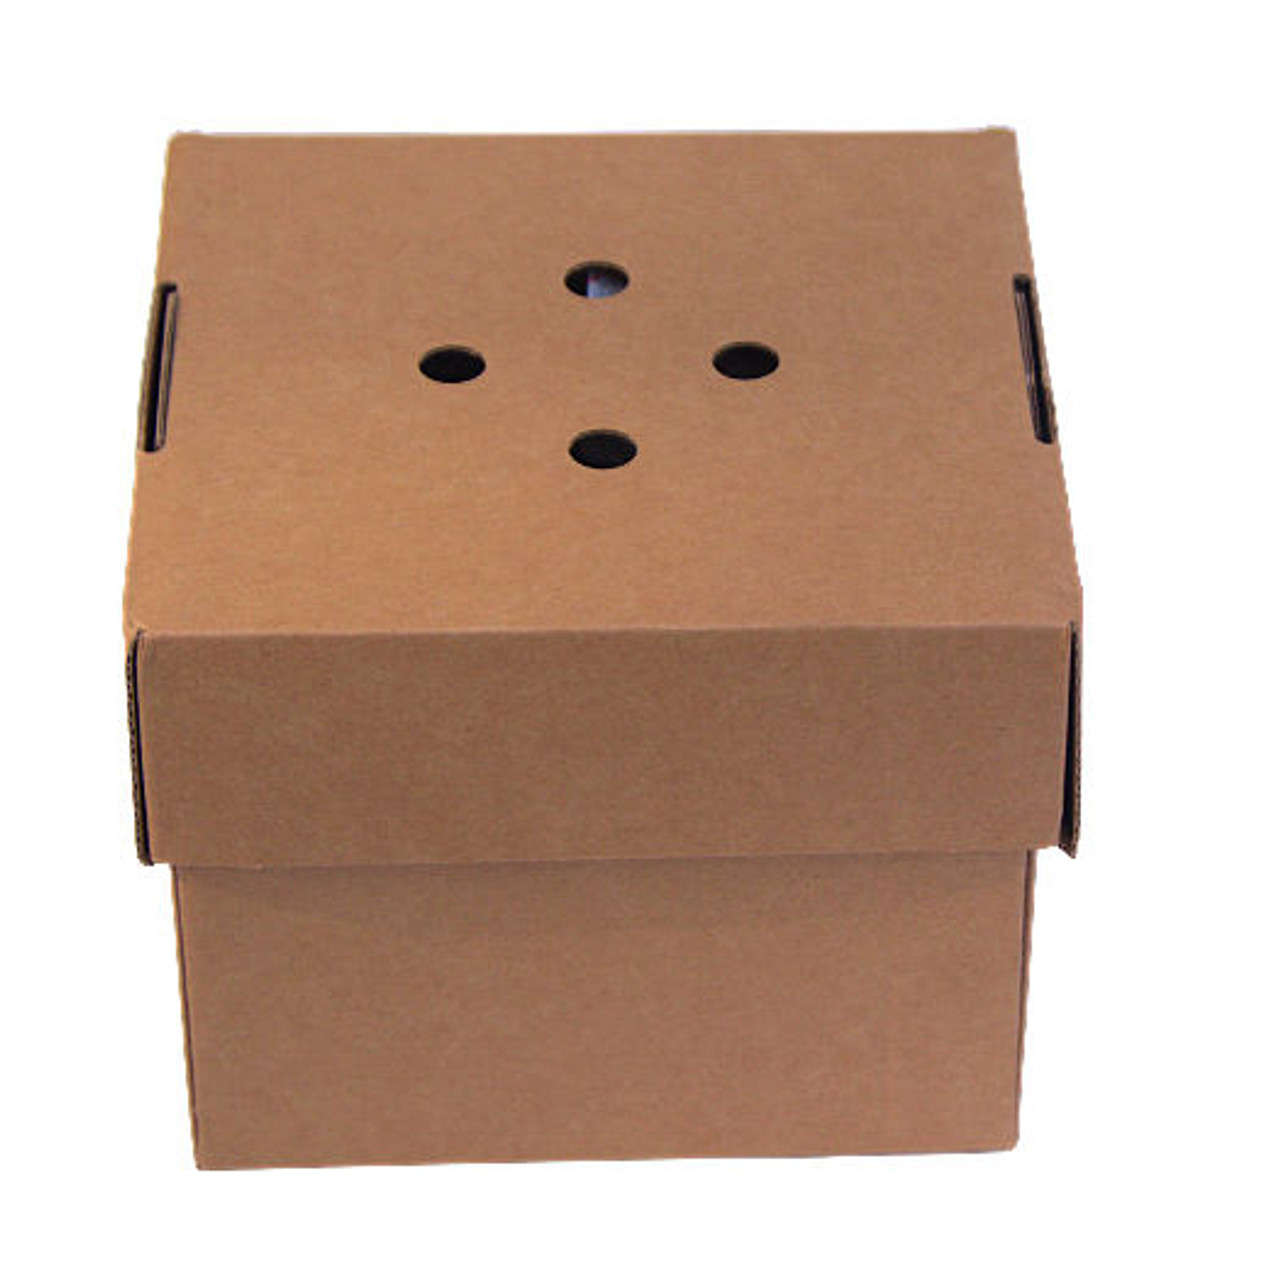  Heavy Duty Cardboard Takeaway Burger Box  - see options